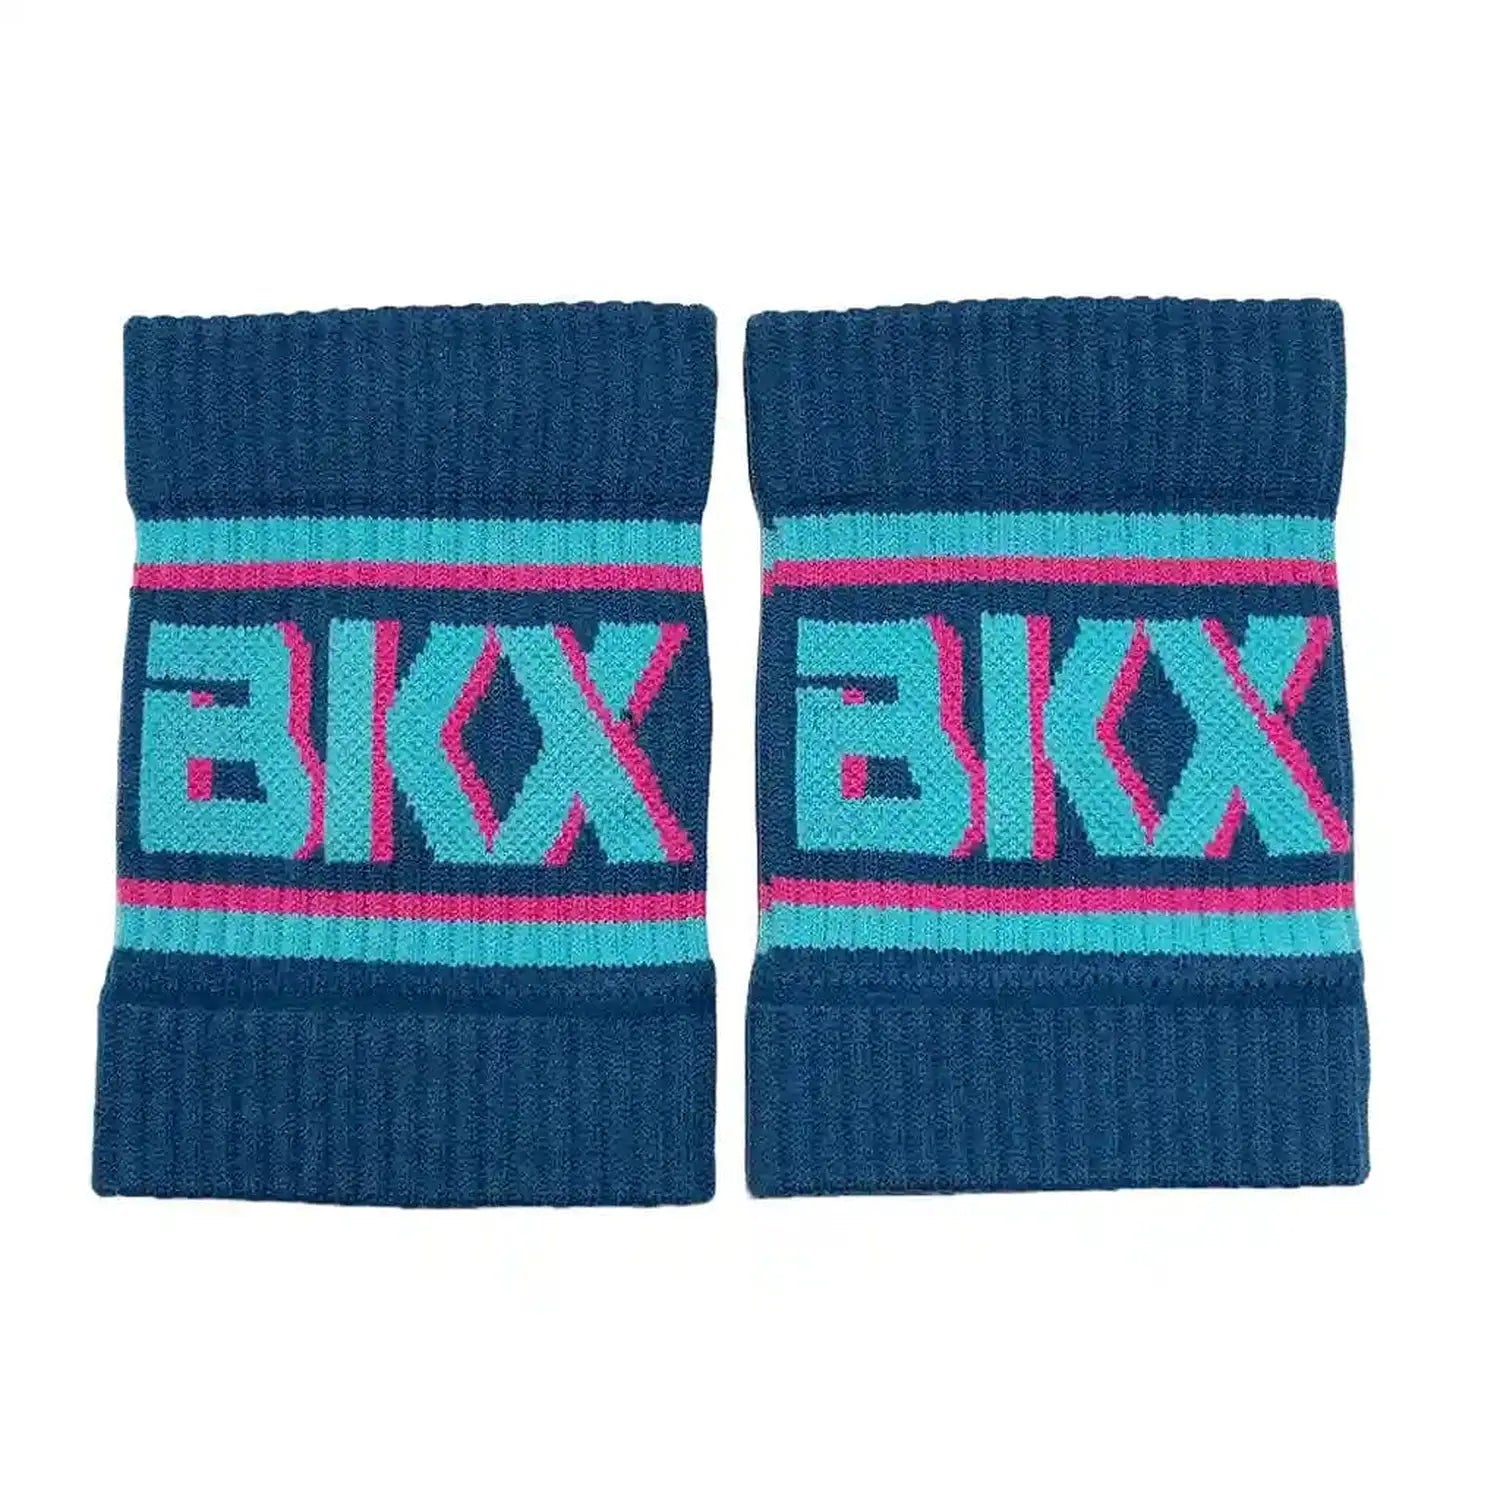 Bear KompleX BKX Wristbands (Schweissbänder) Razz kaufen bei HighPowered.ch